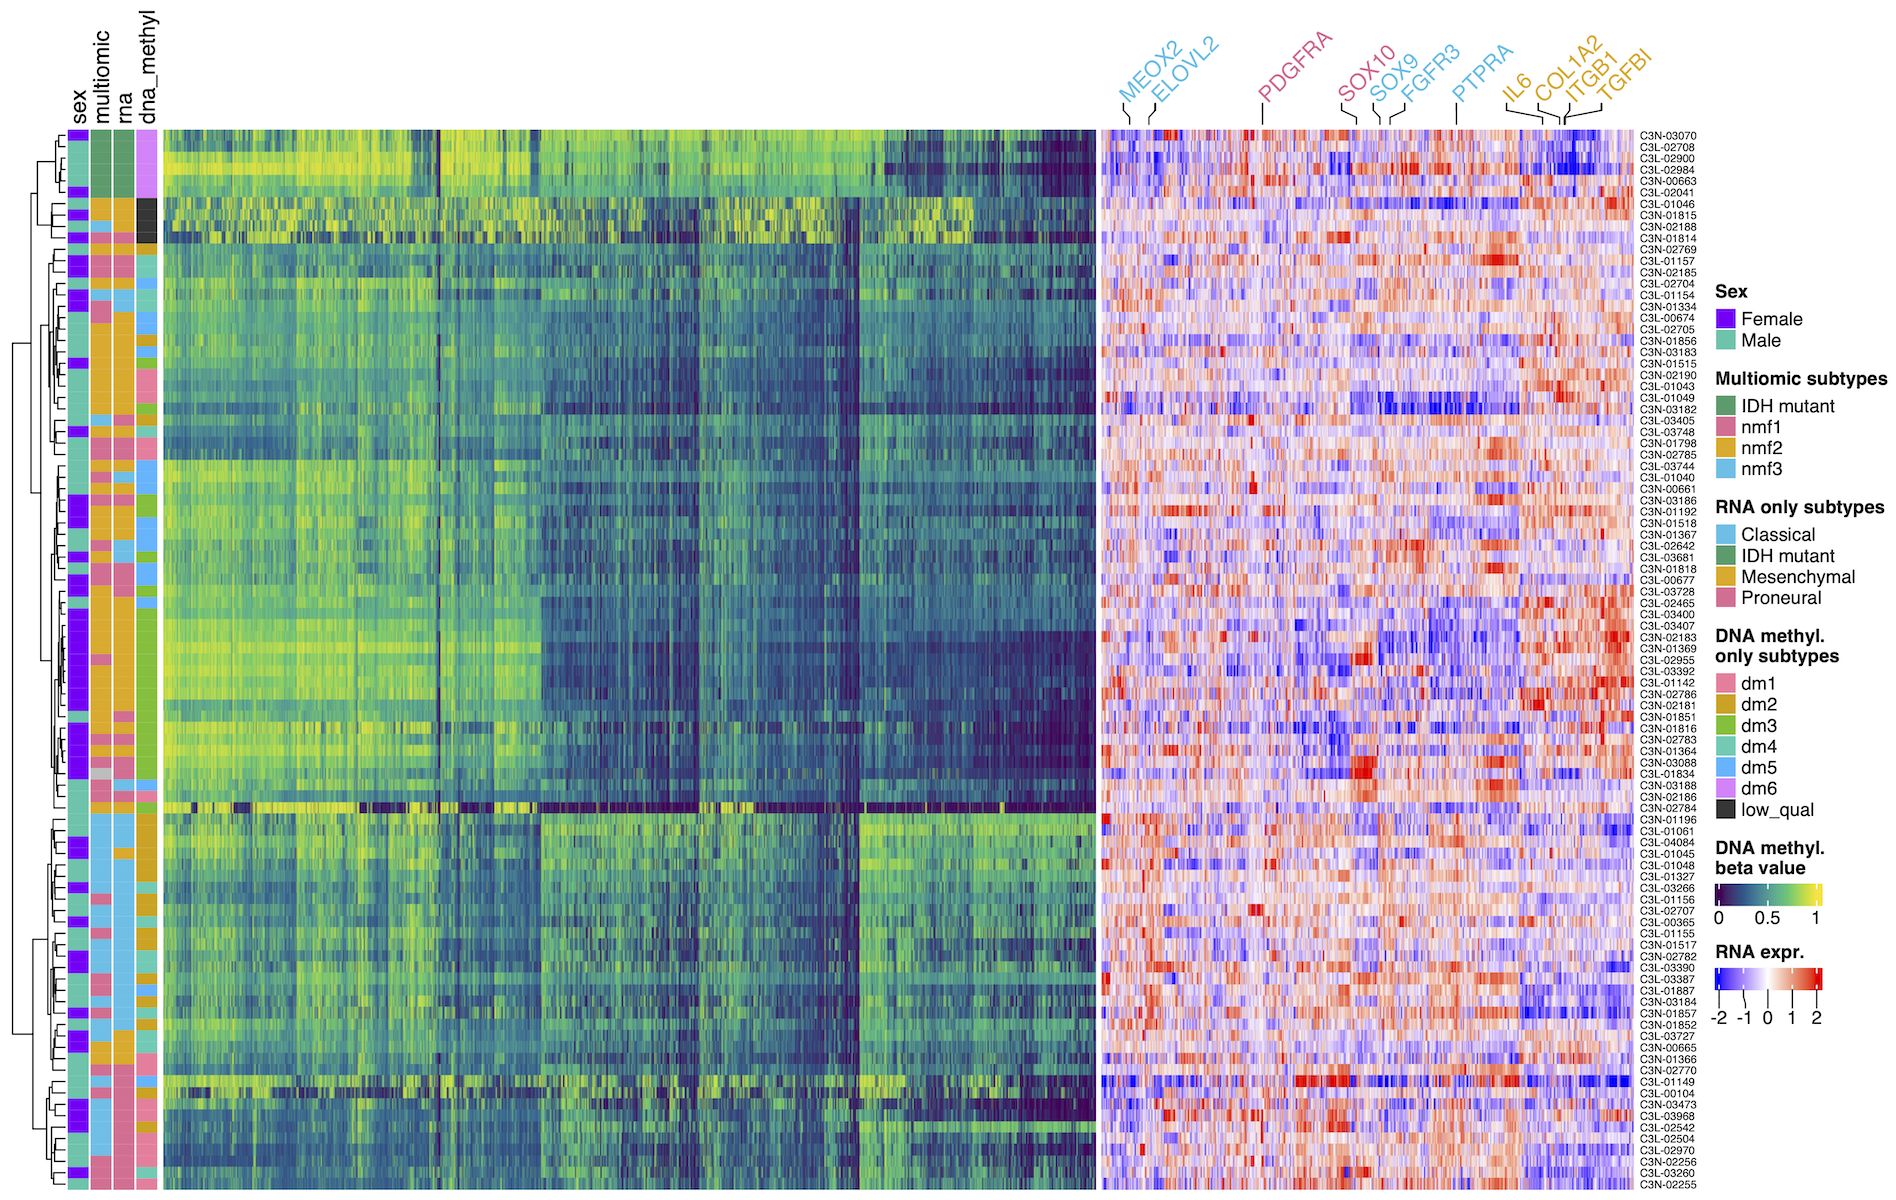 DNA methylation and gene expression landscape of our glioblastoma cohort.